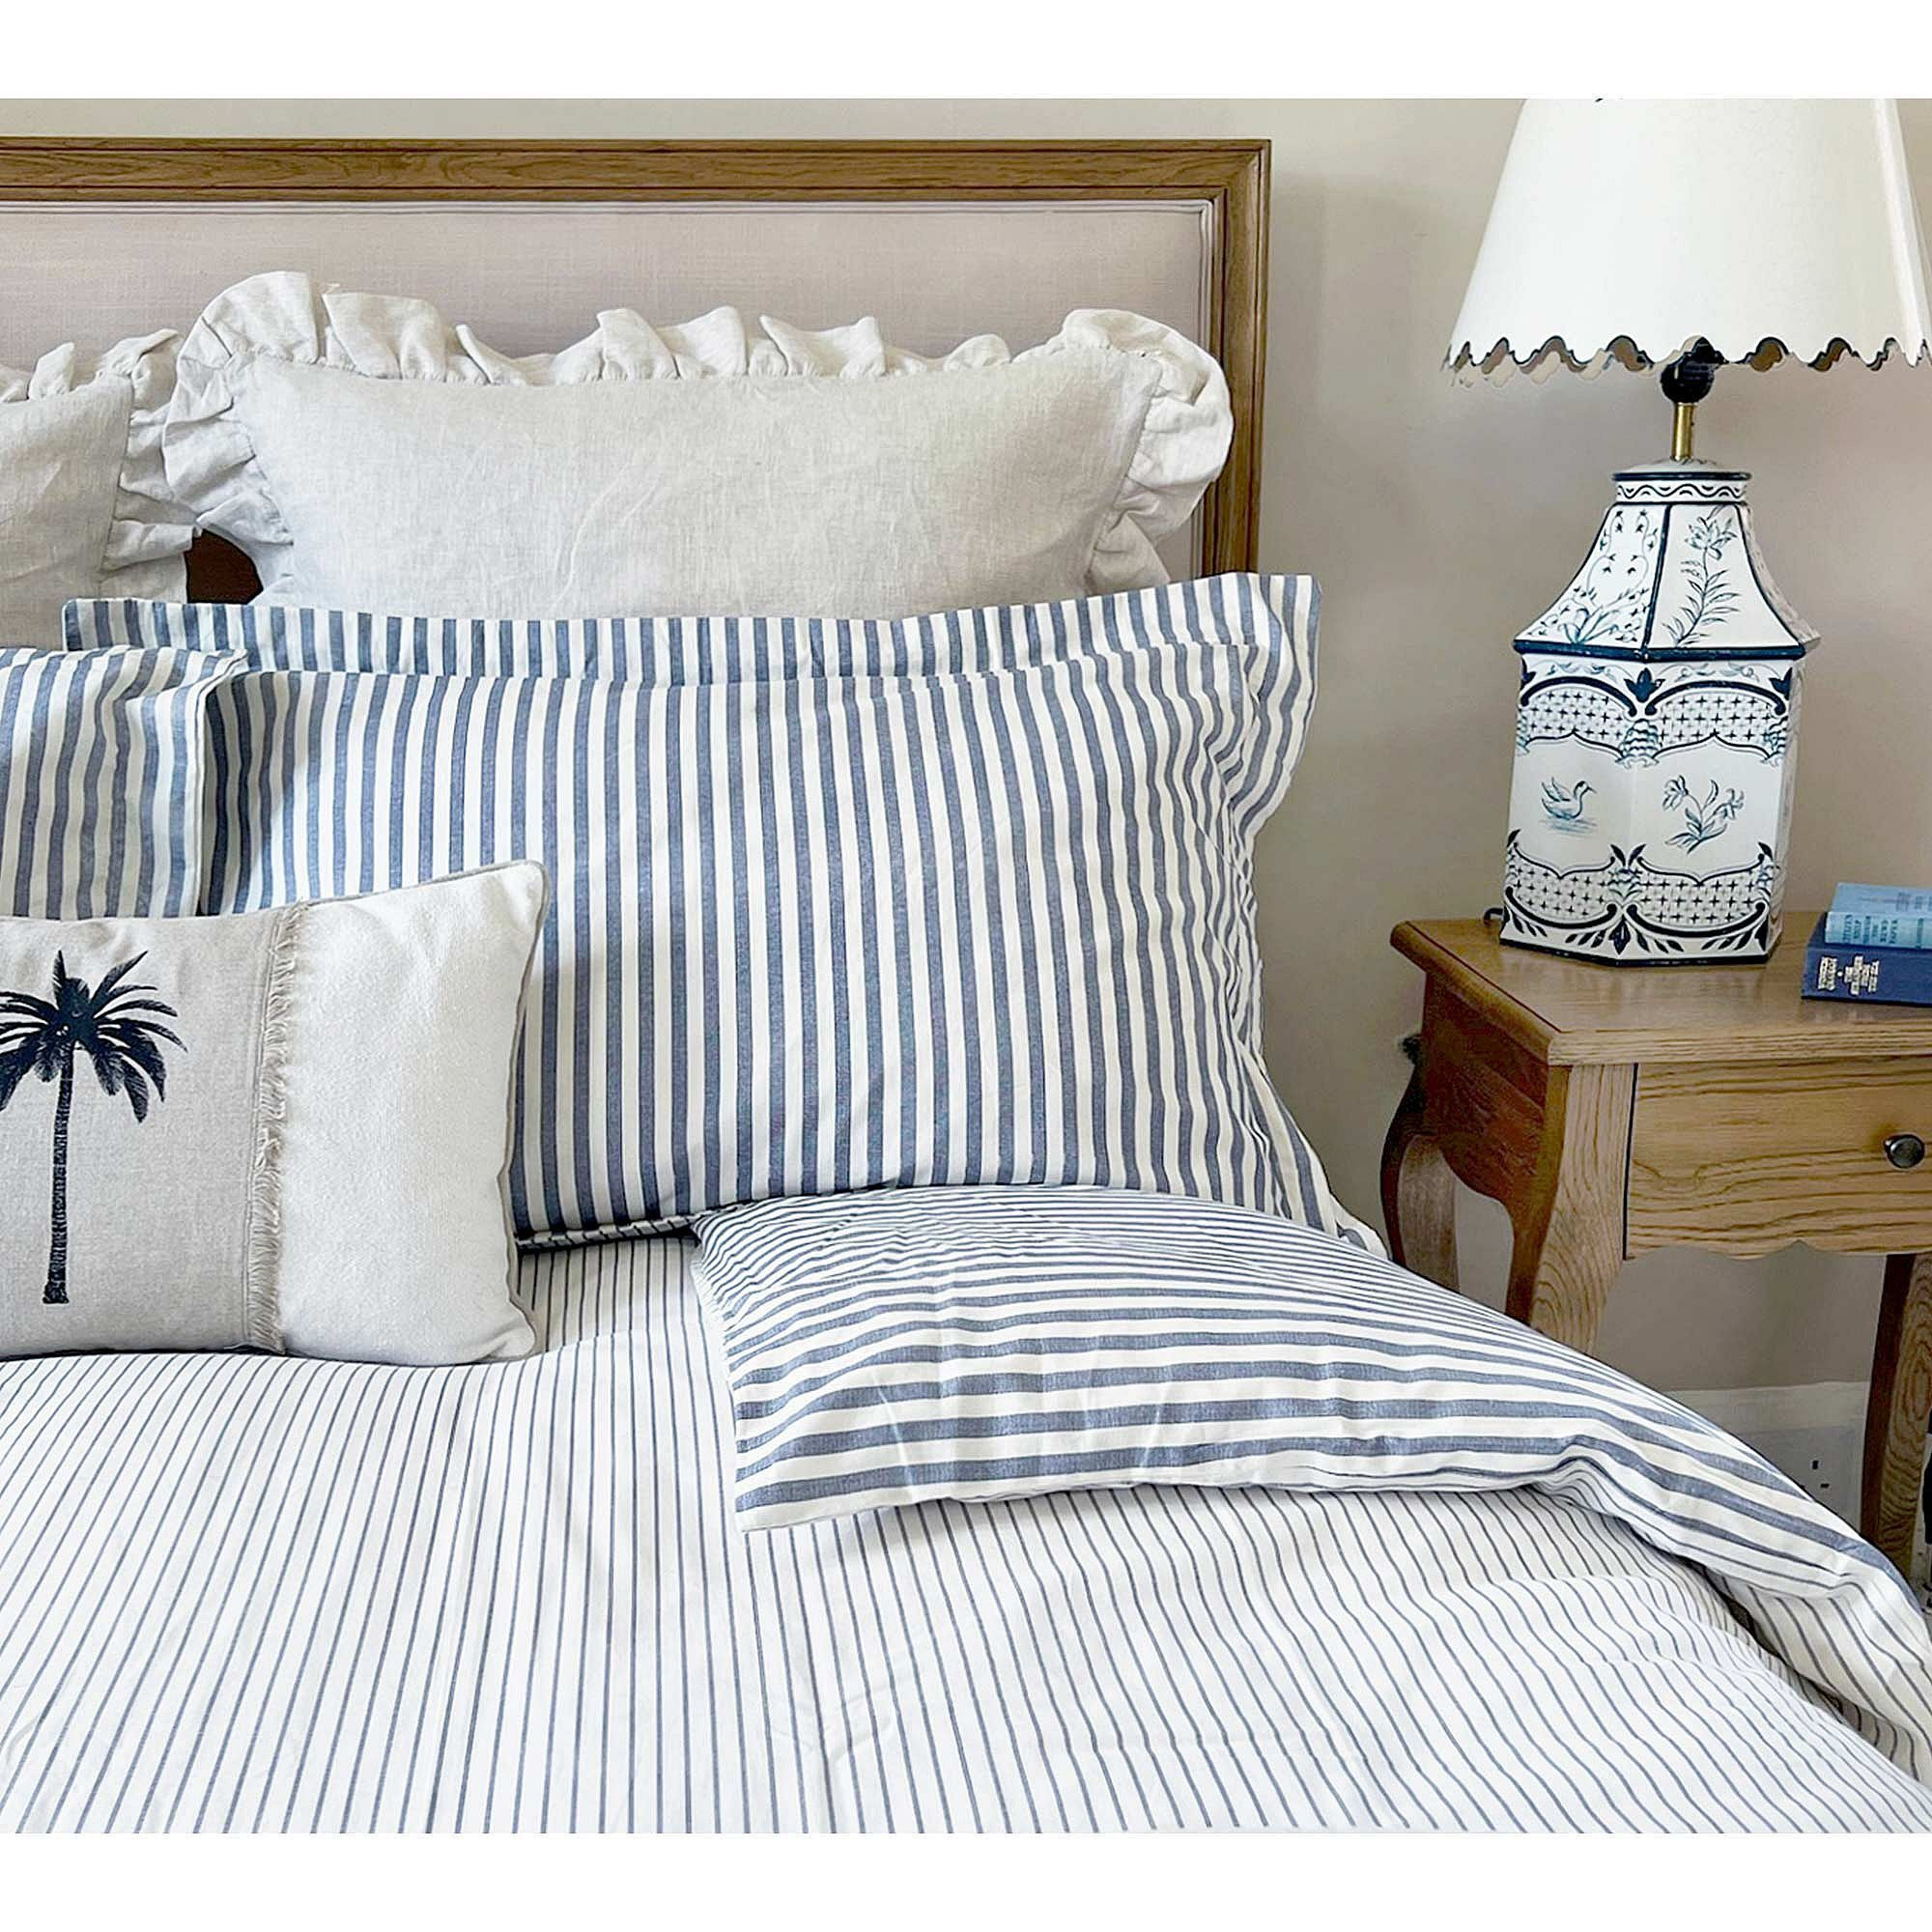 Petit Breton Stripe Bed Linen Set in Sea Blue (Single Set) - image 1